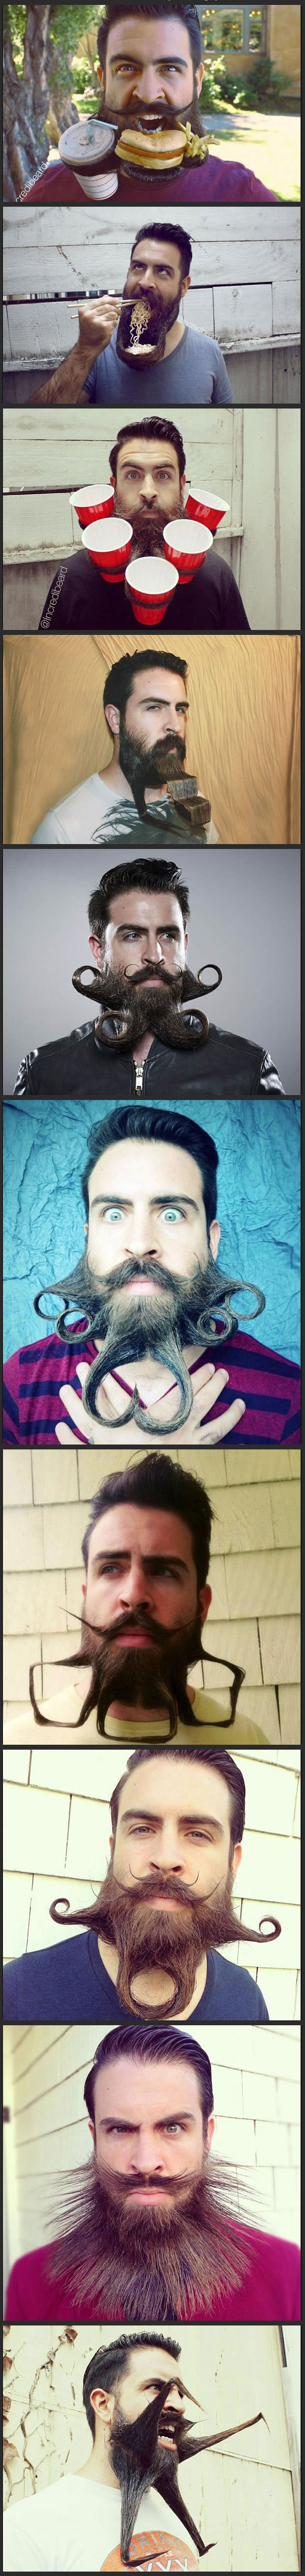 In honor of no shave November, crazy beard guy!